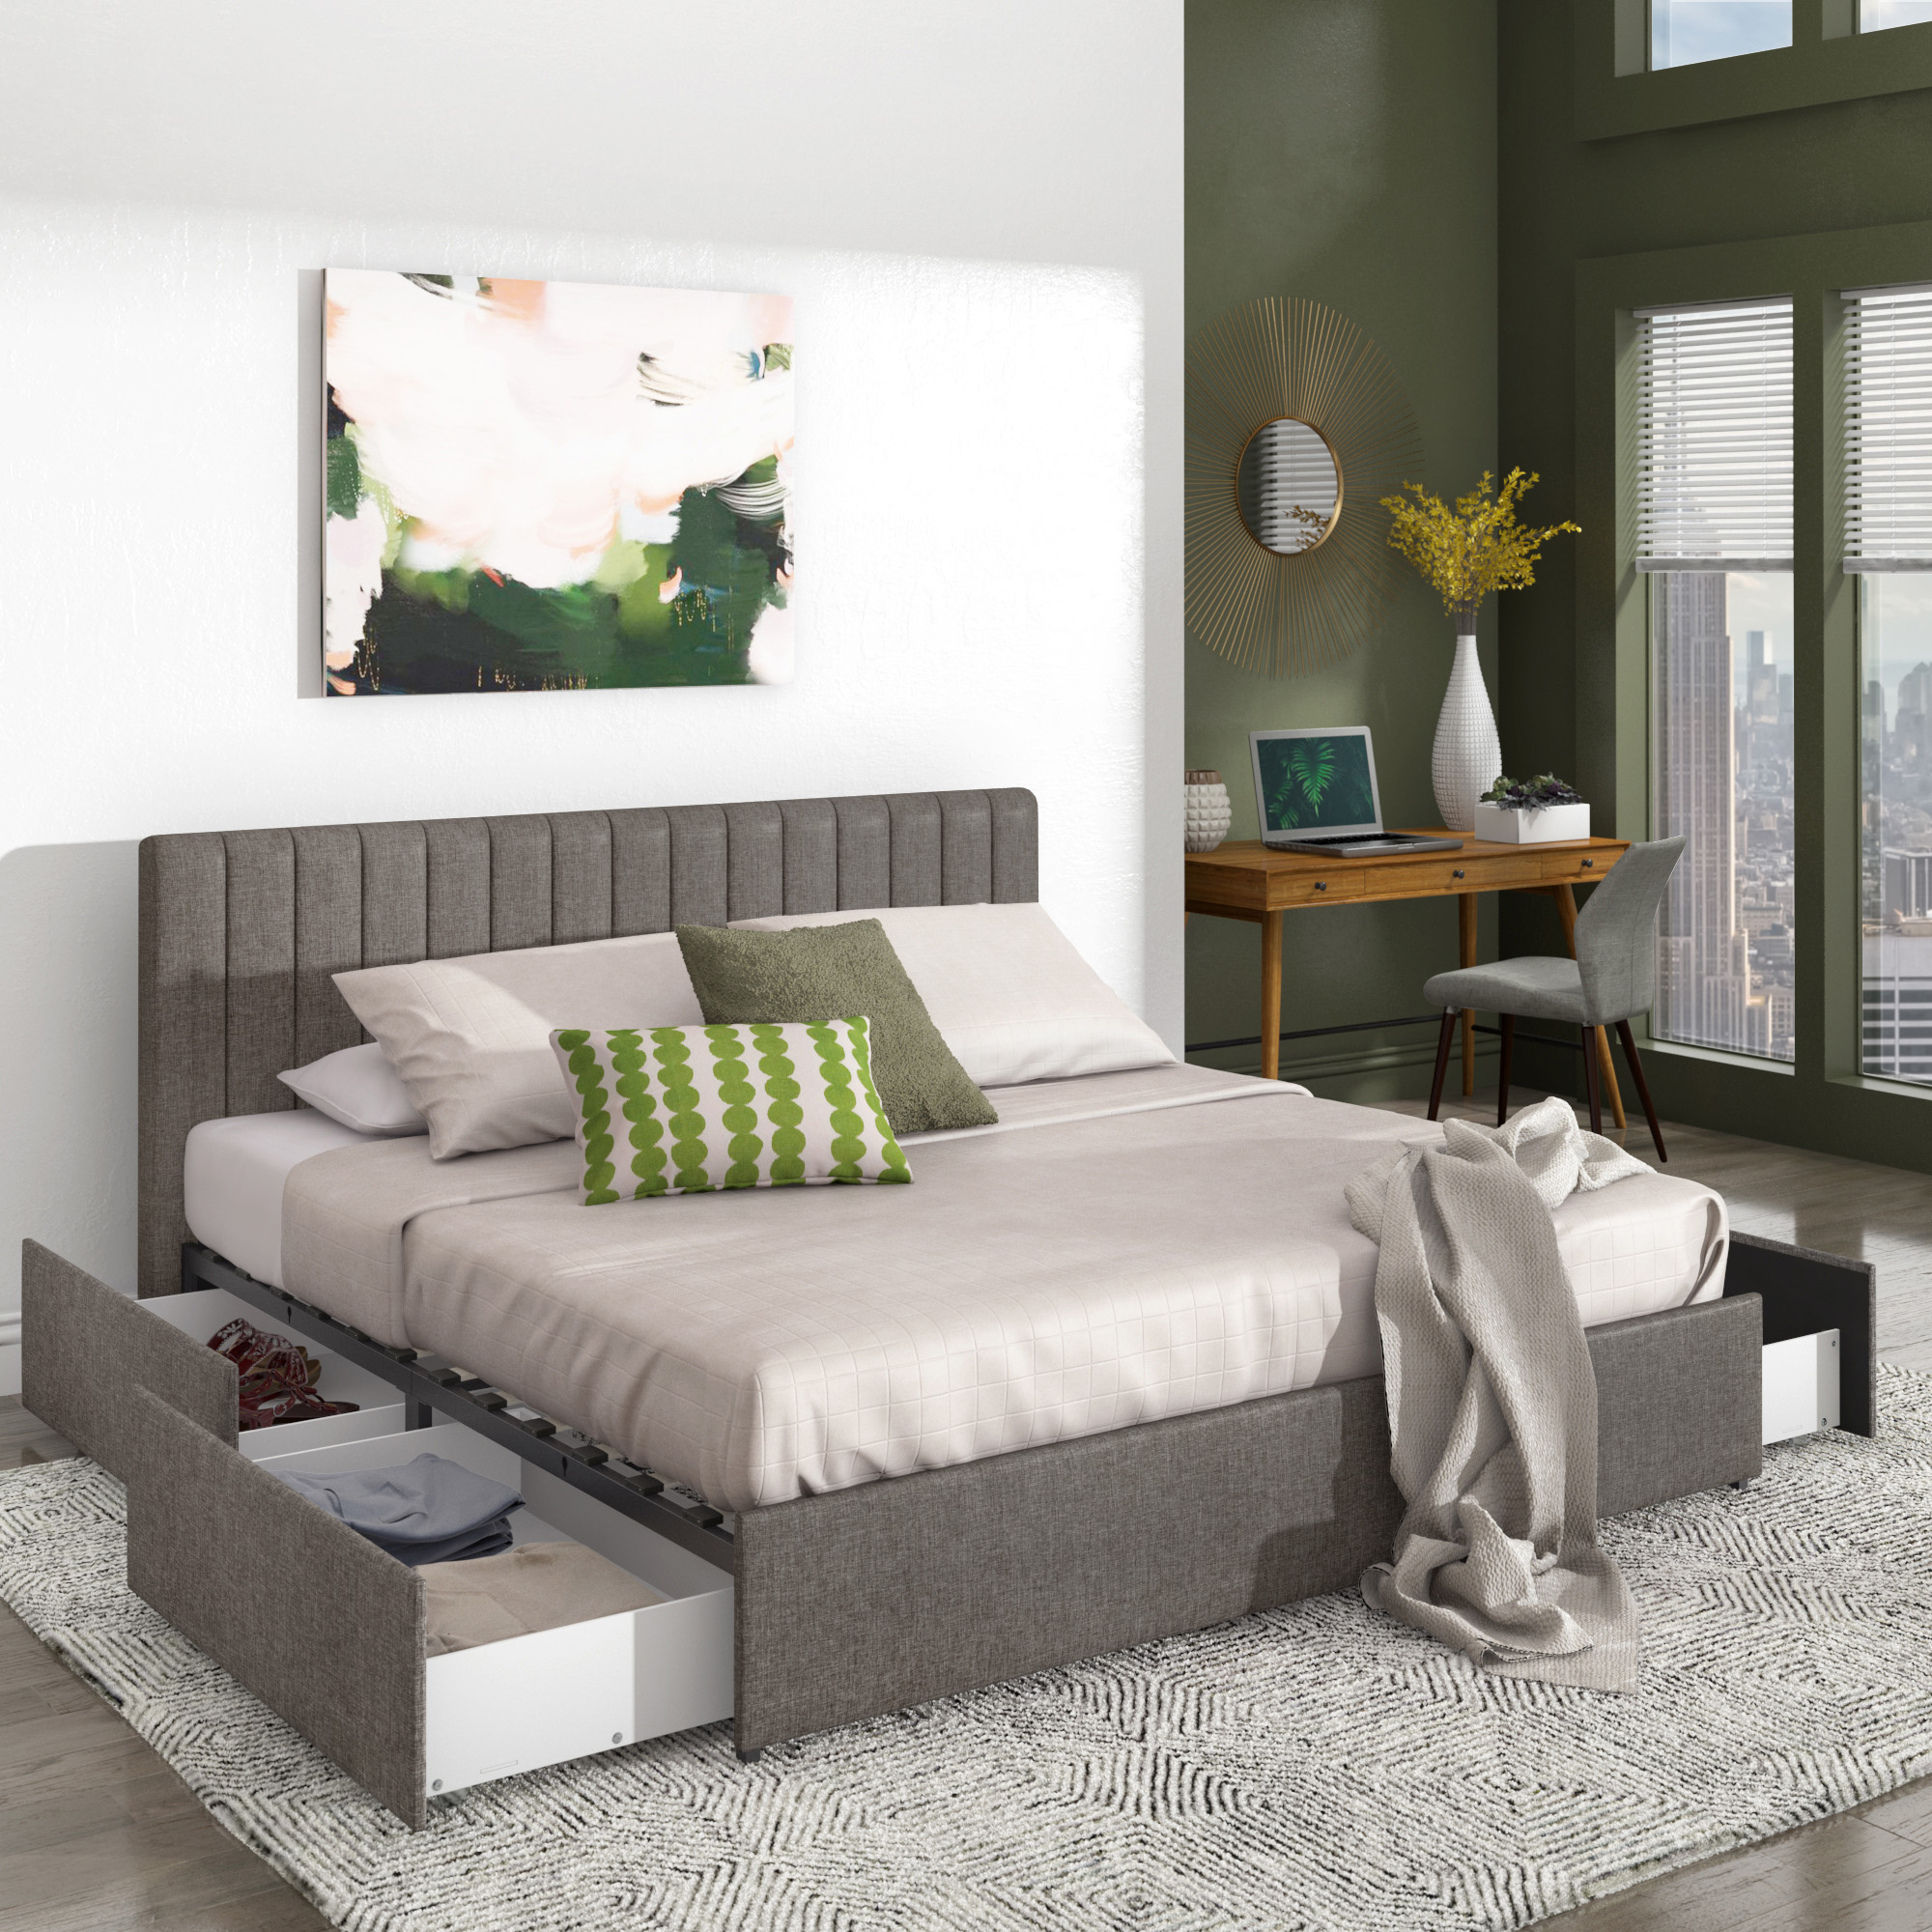 Grey Linen Upholstered Storage Platform Bed with Channel Headboard